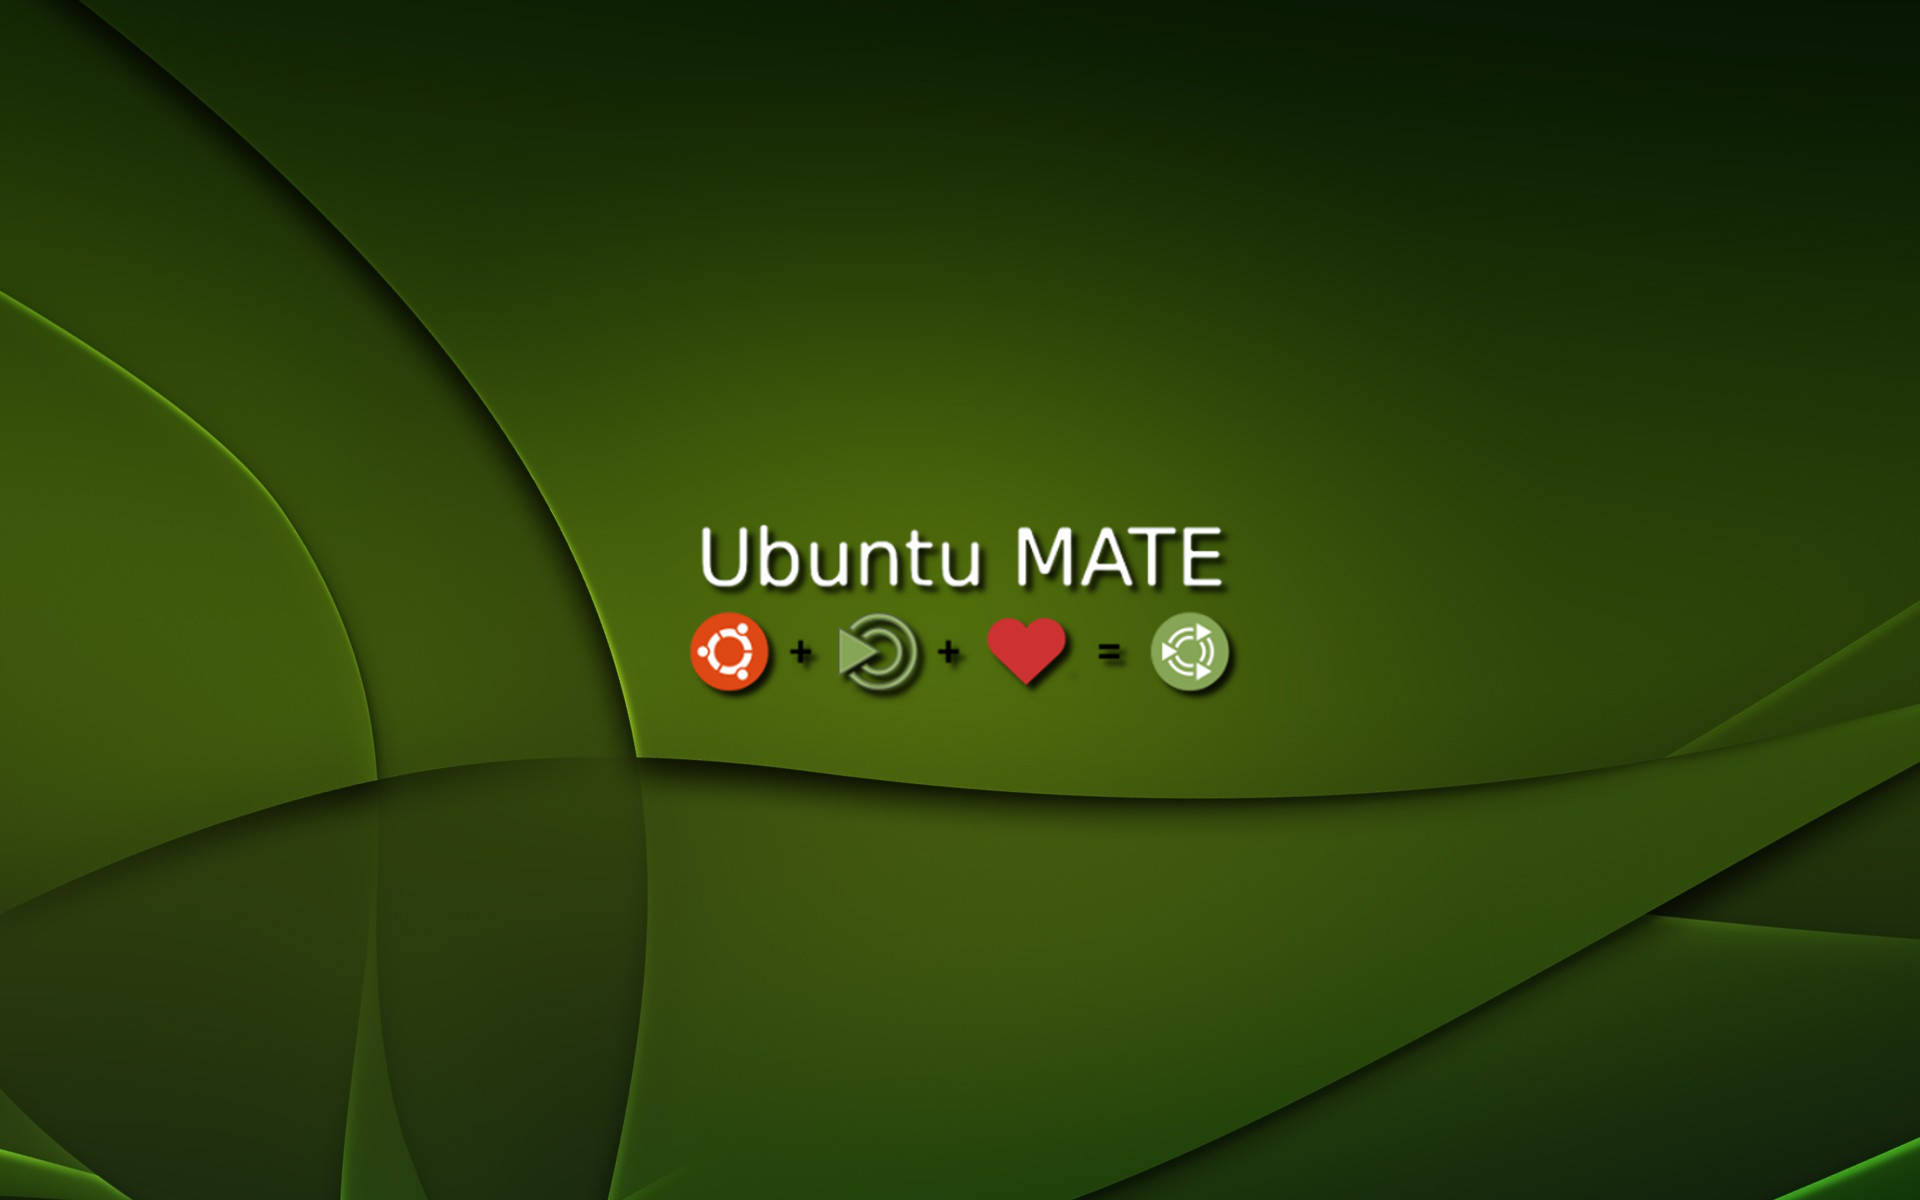 Linux Os Ubuntu Mate Green Background